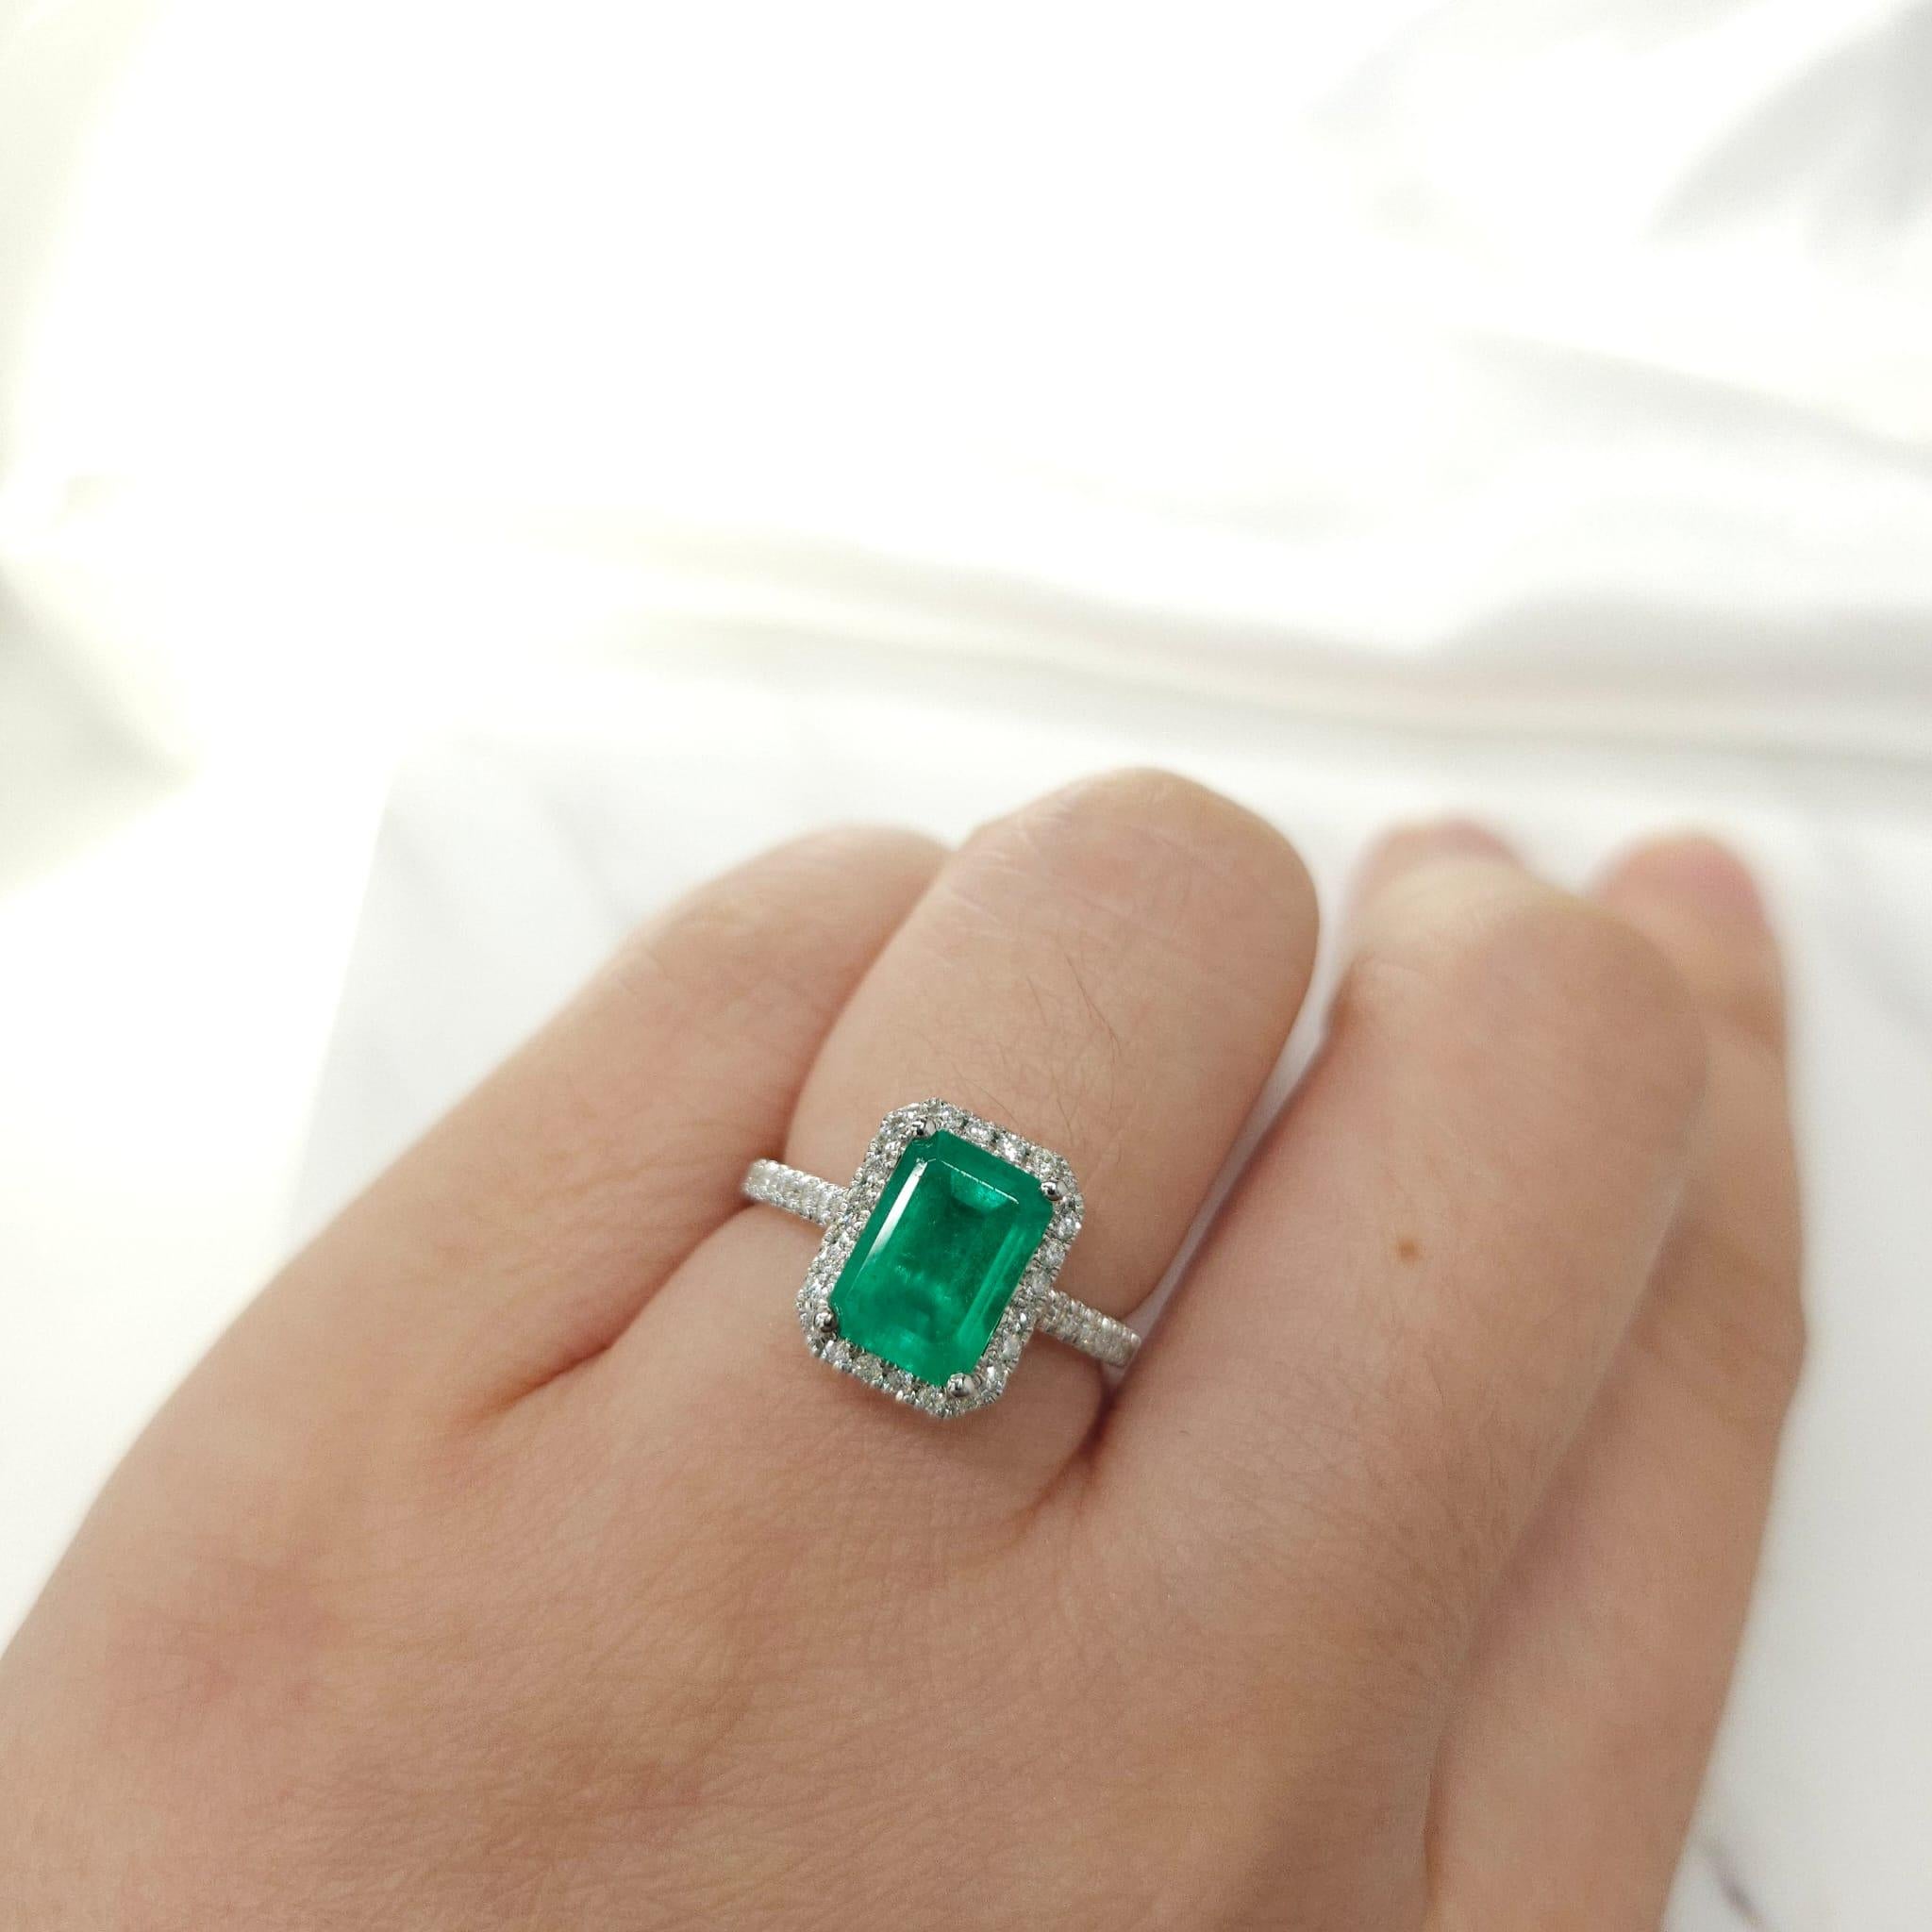 IGI Certified 1.76 Carat Emerald & Diamond Ring in 18K White Gold For Sale 3